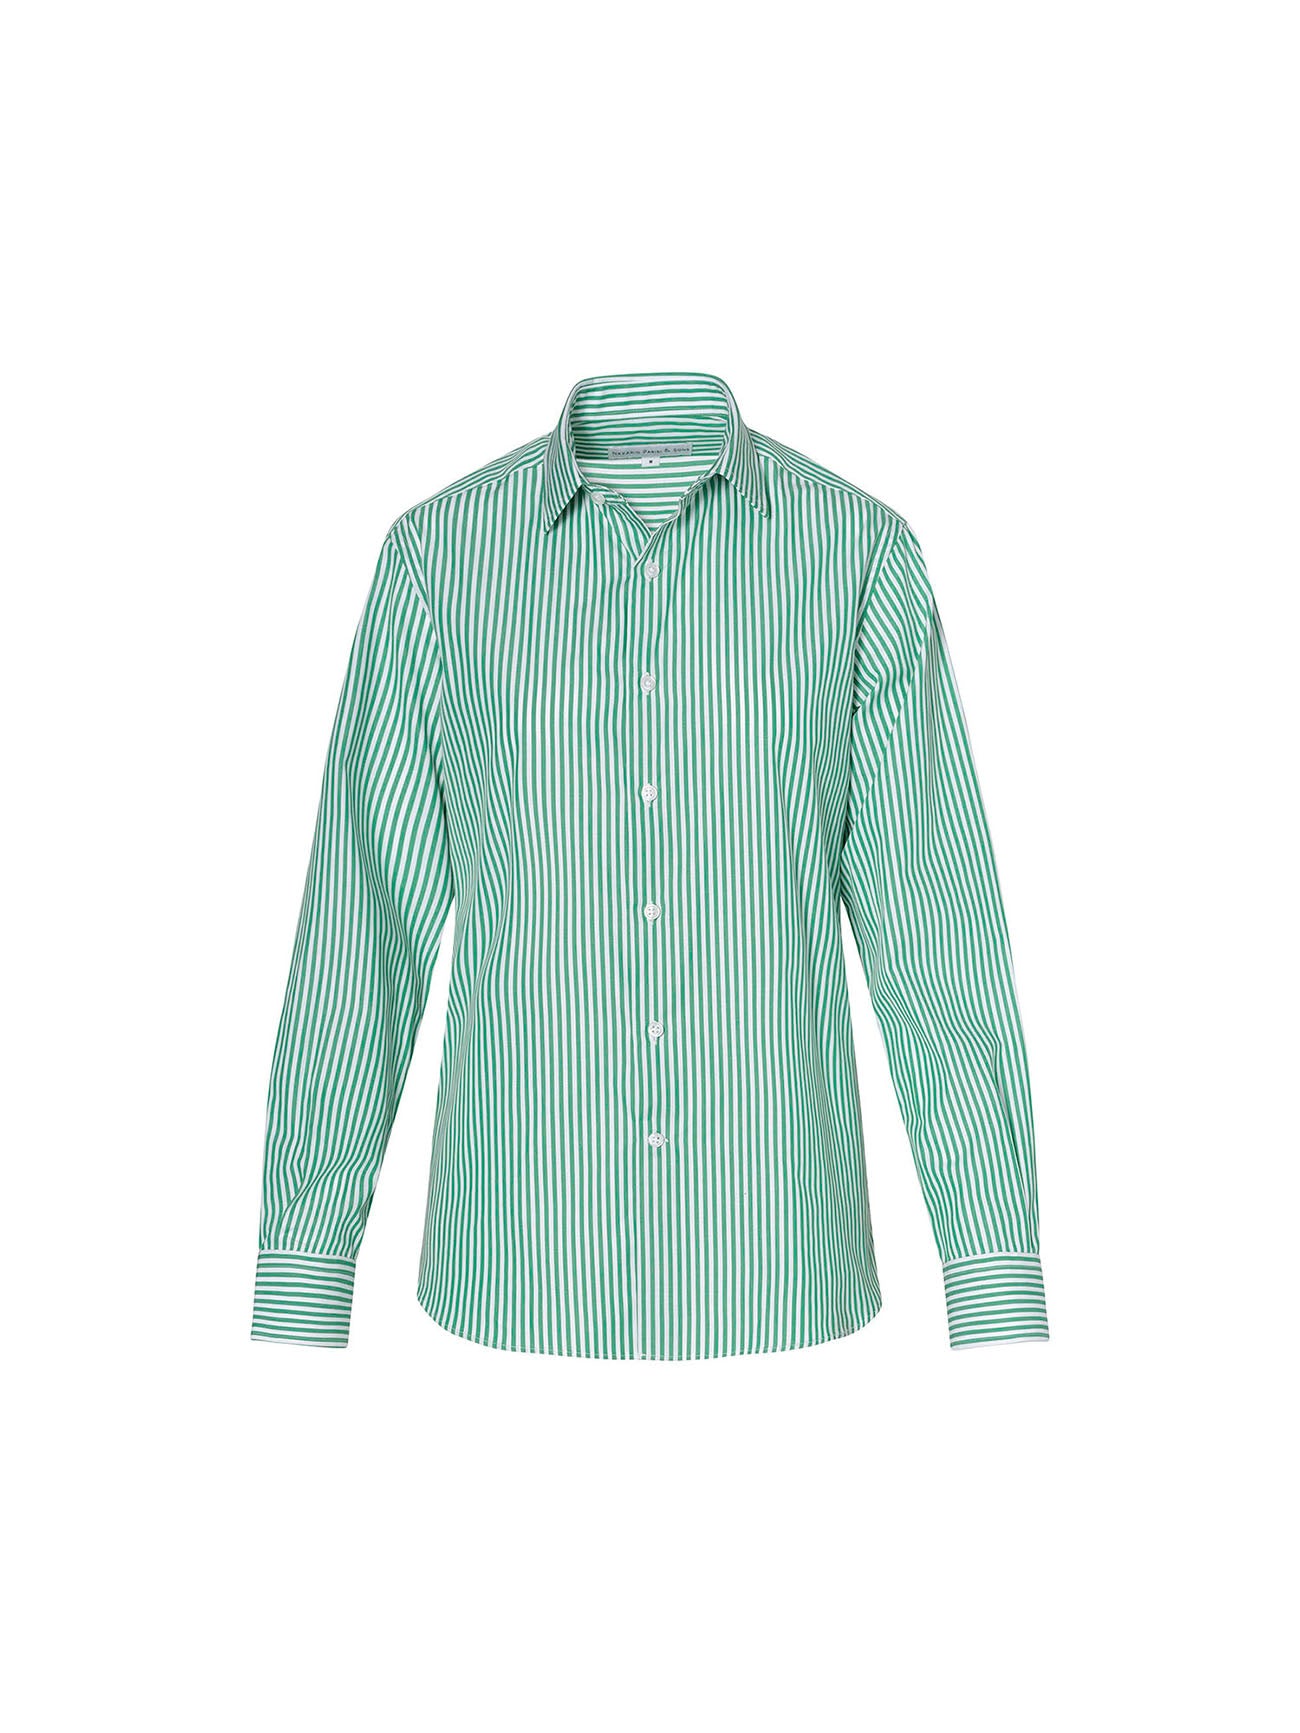 Sorrento Green Stripe Shirt